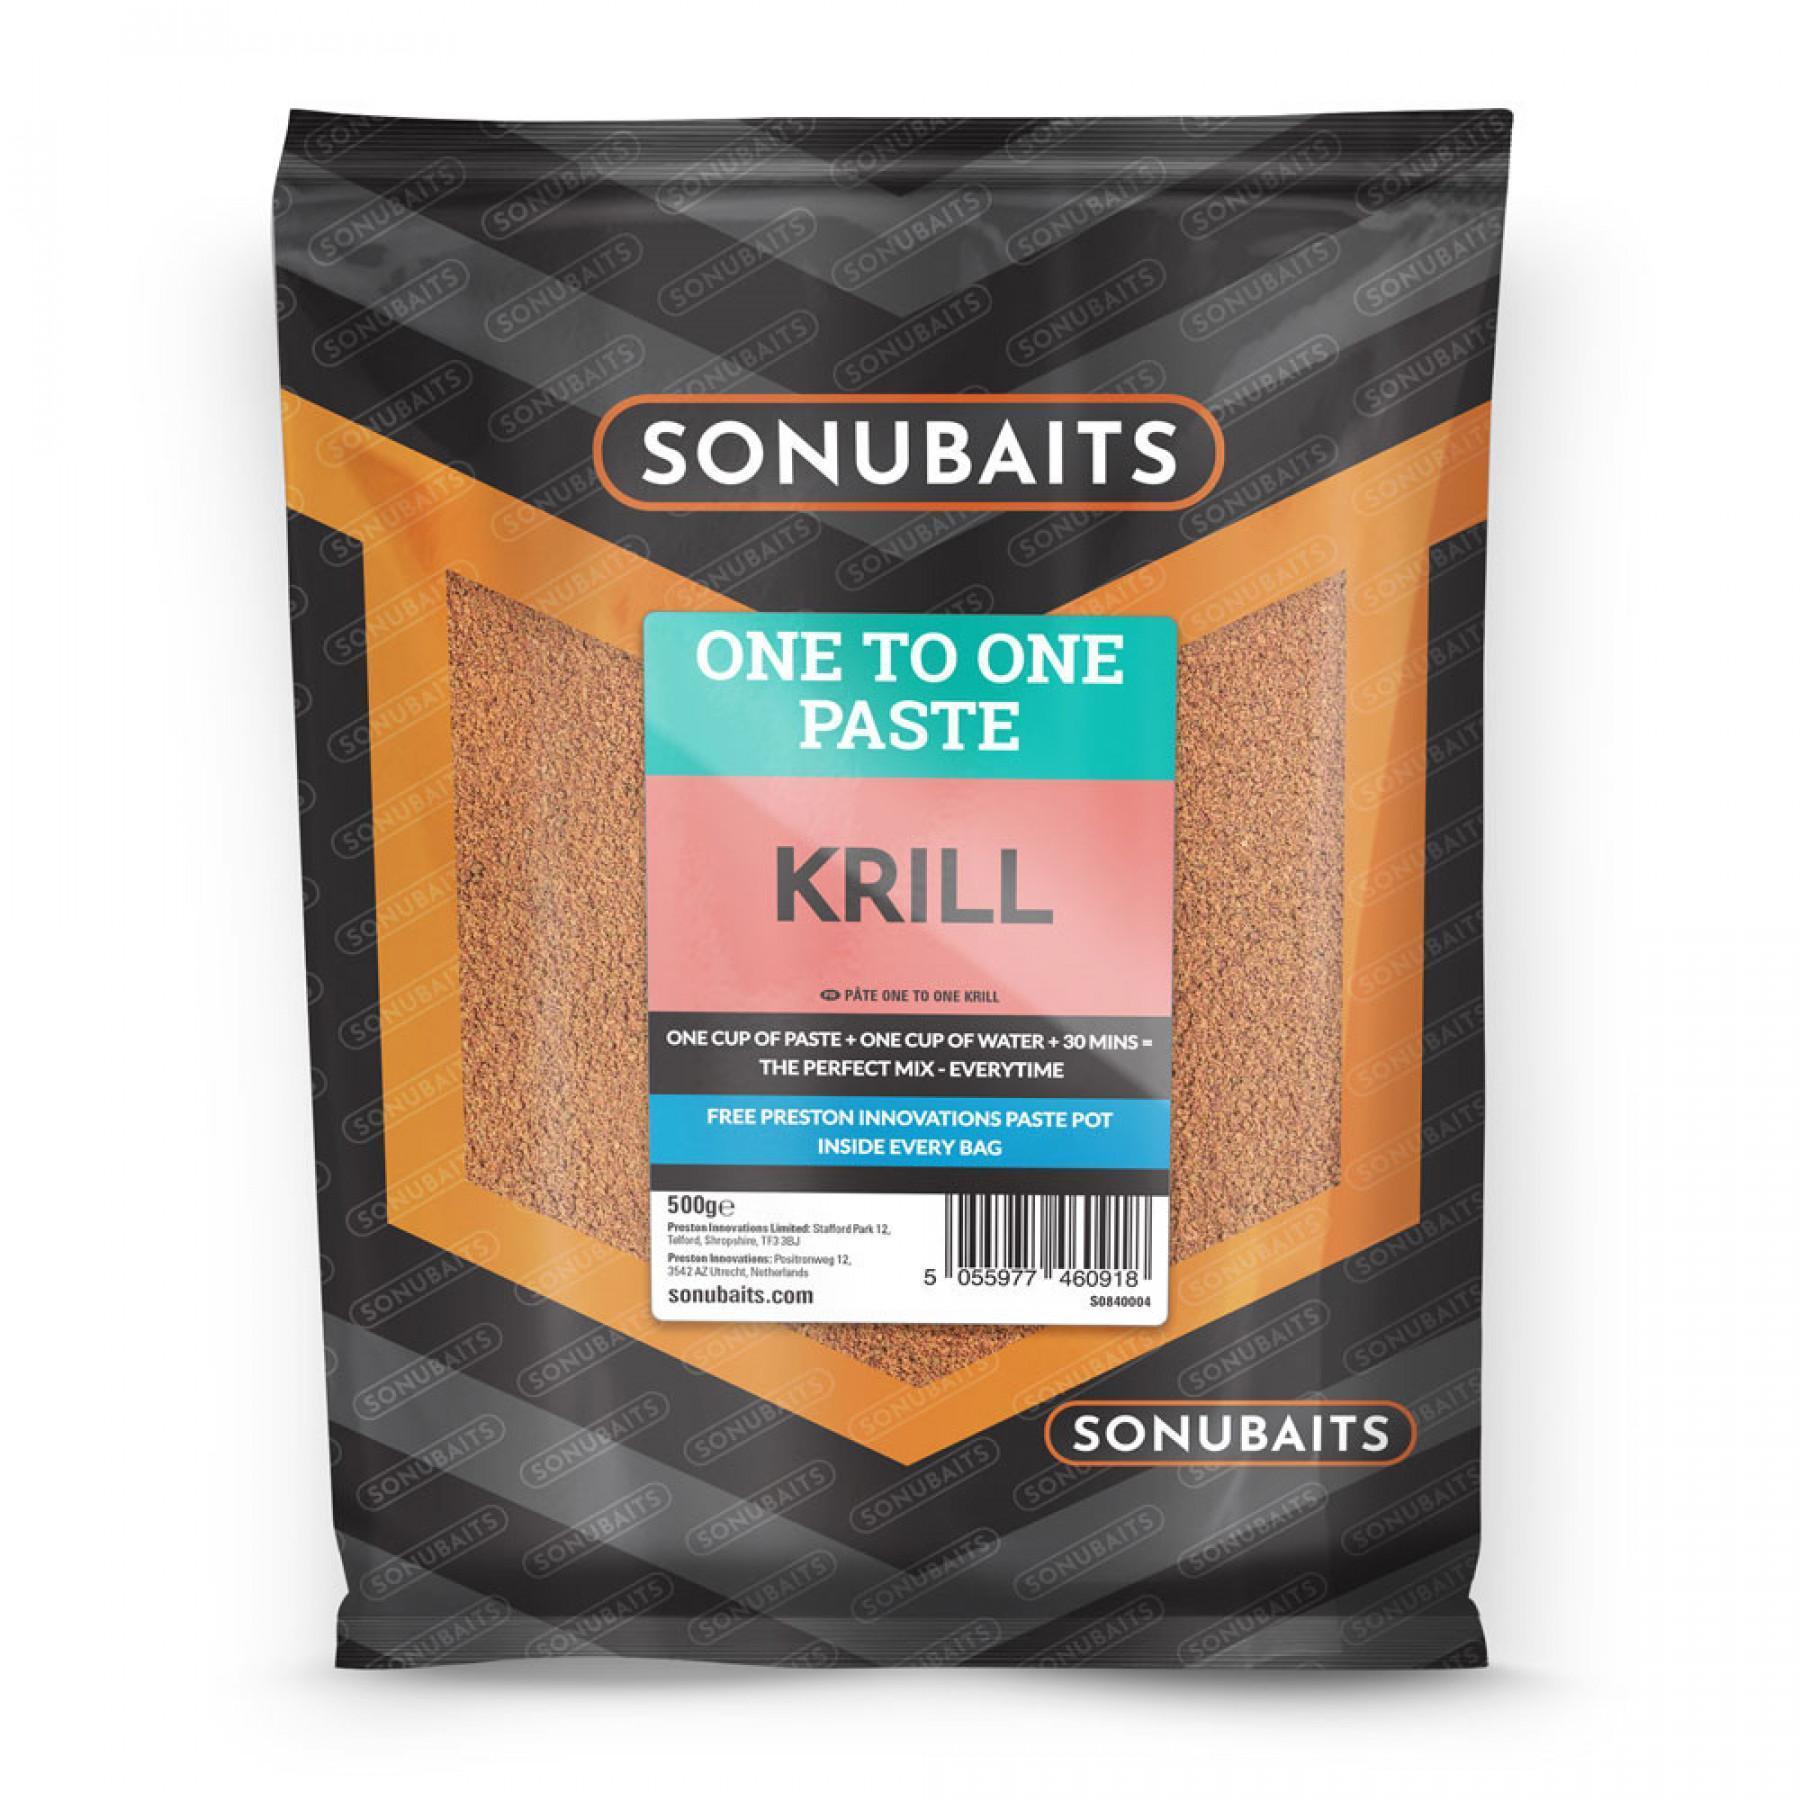 Colar Sonubaits one to one paste Krill